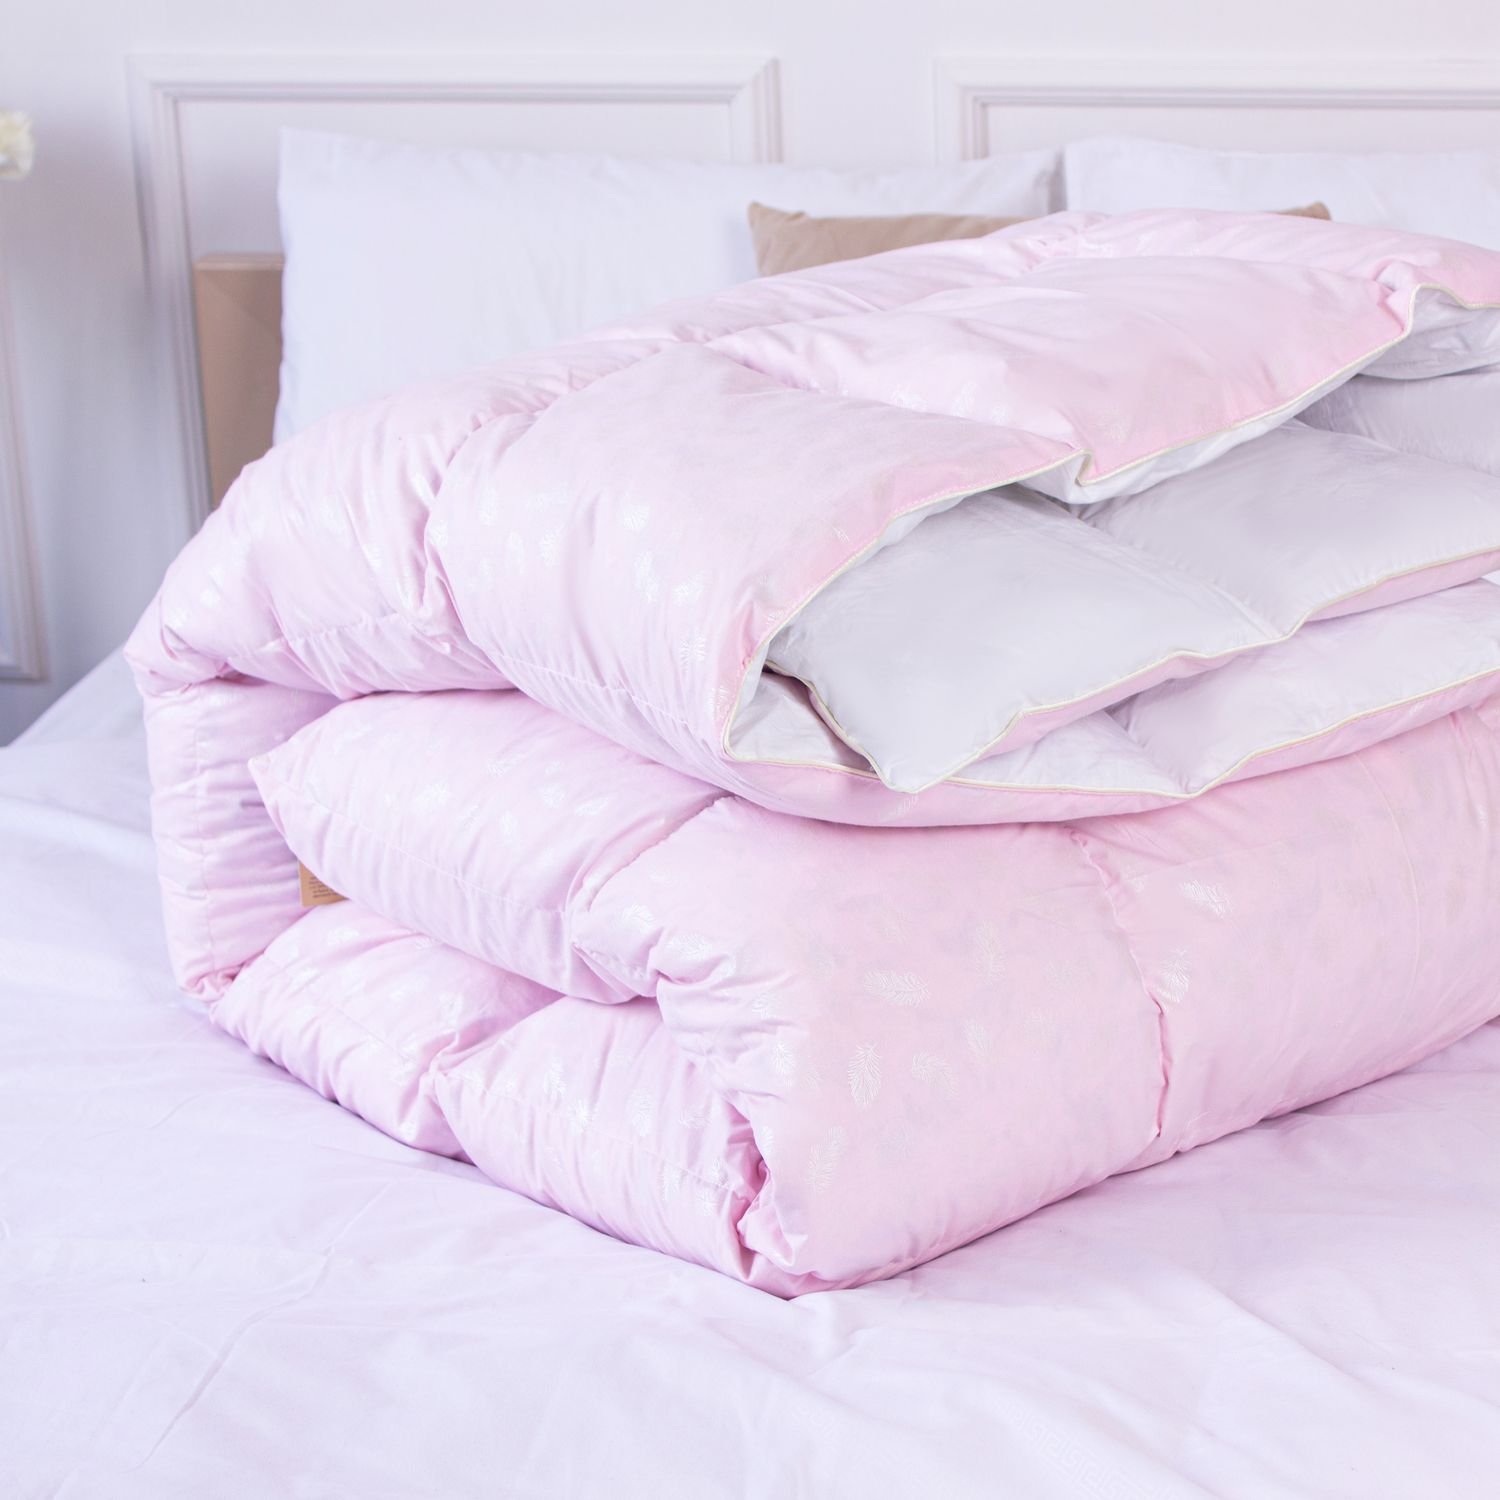 Одеяло пуховое MirSon Karmen №1856 Bio-Pink, 90% пух, двуспальное, 205x172, розовое (2200003014310) - фото 3